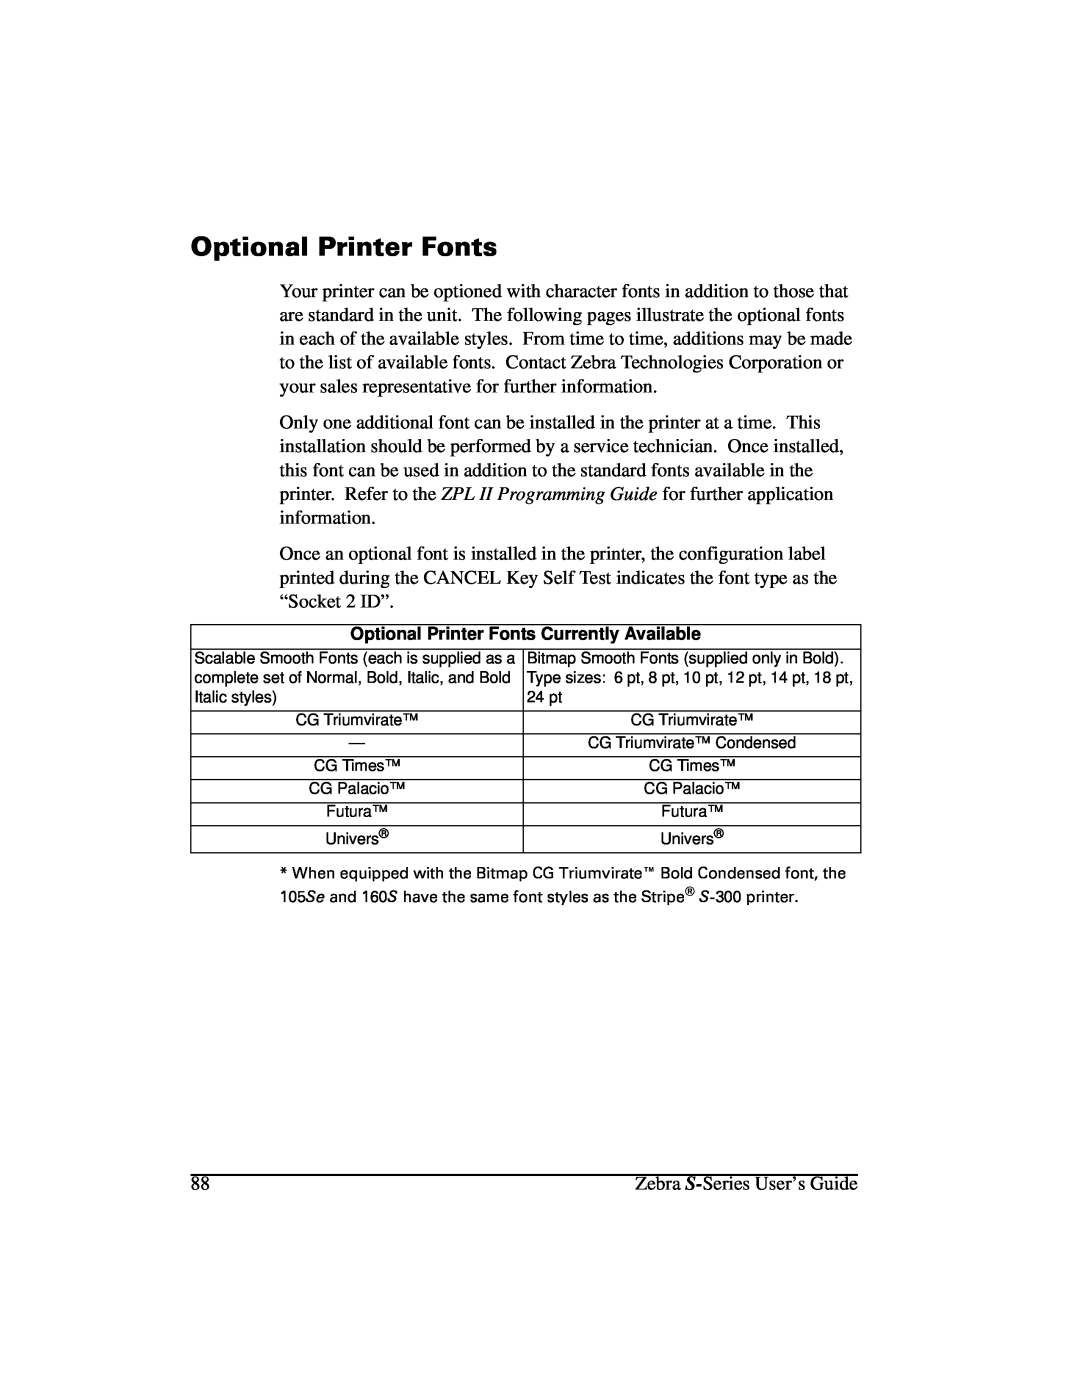 Zebra Technologies 105Se 2SWLRQDO3ULQWHURQWV, Optional Printer Fonts Currently Available, Italic styles, 24 pt, Futura 